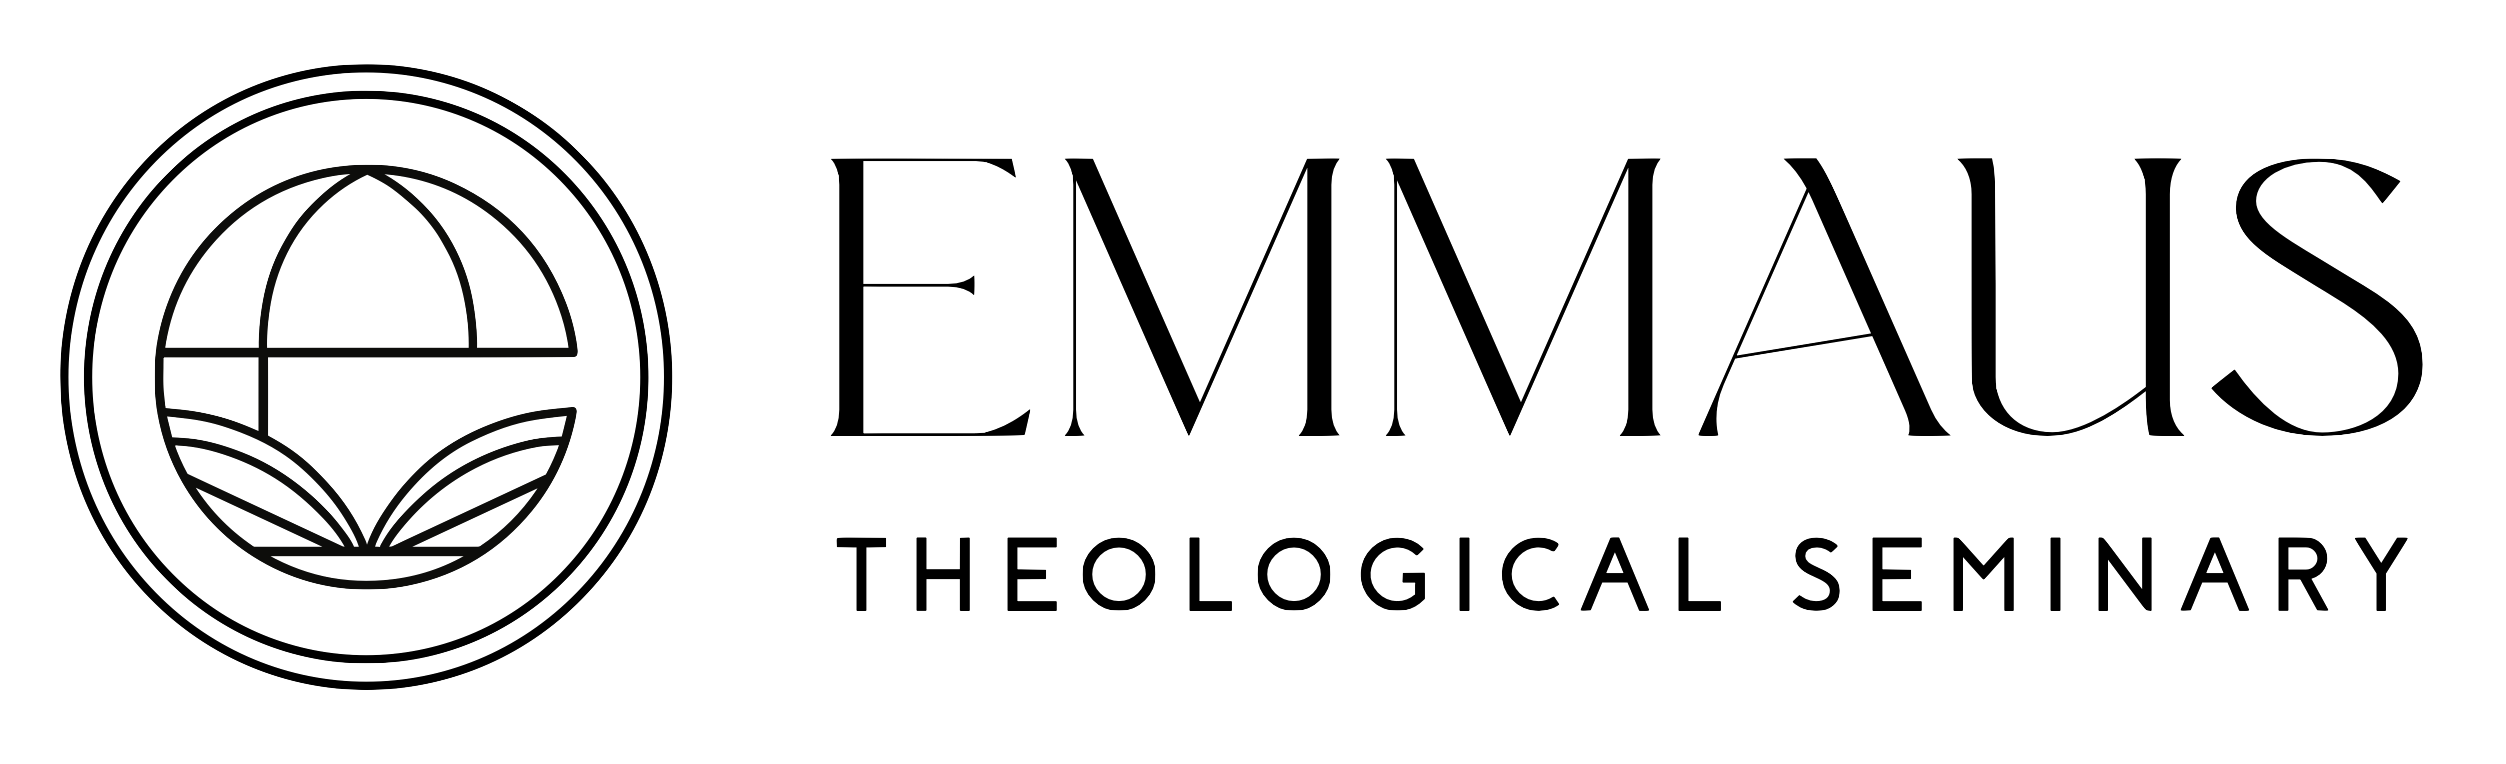 Emmaus Theological Seminary logo